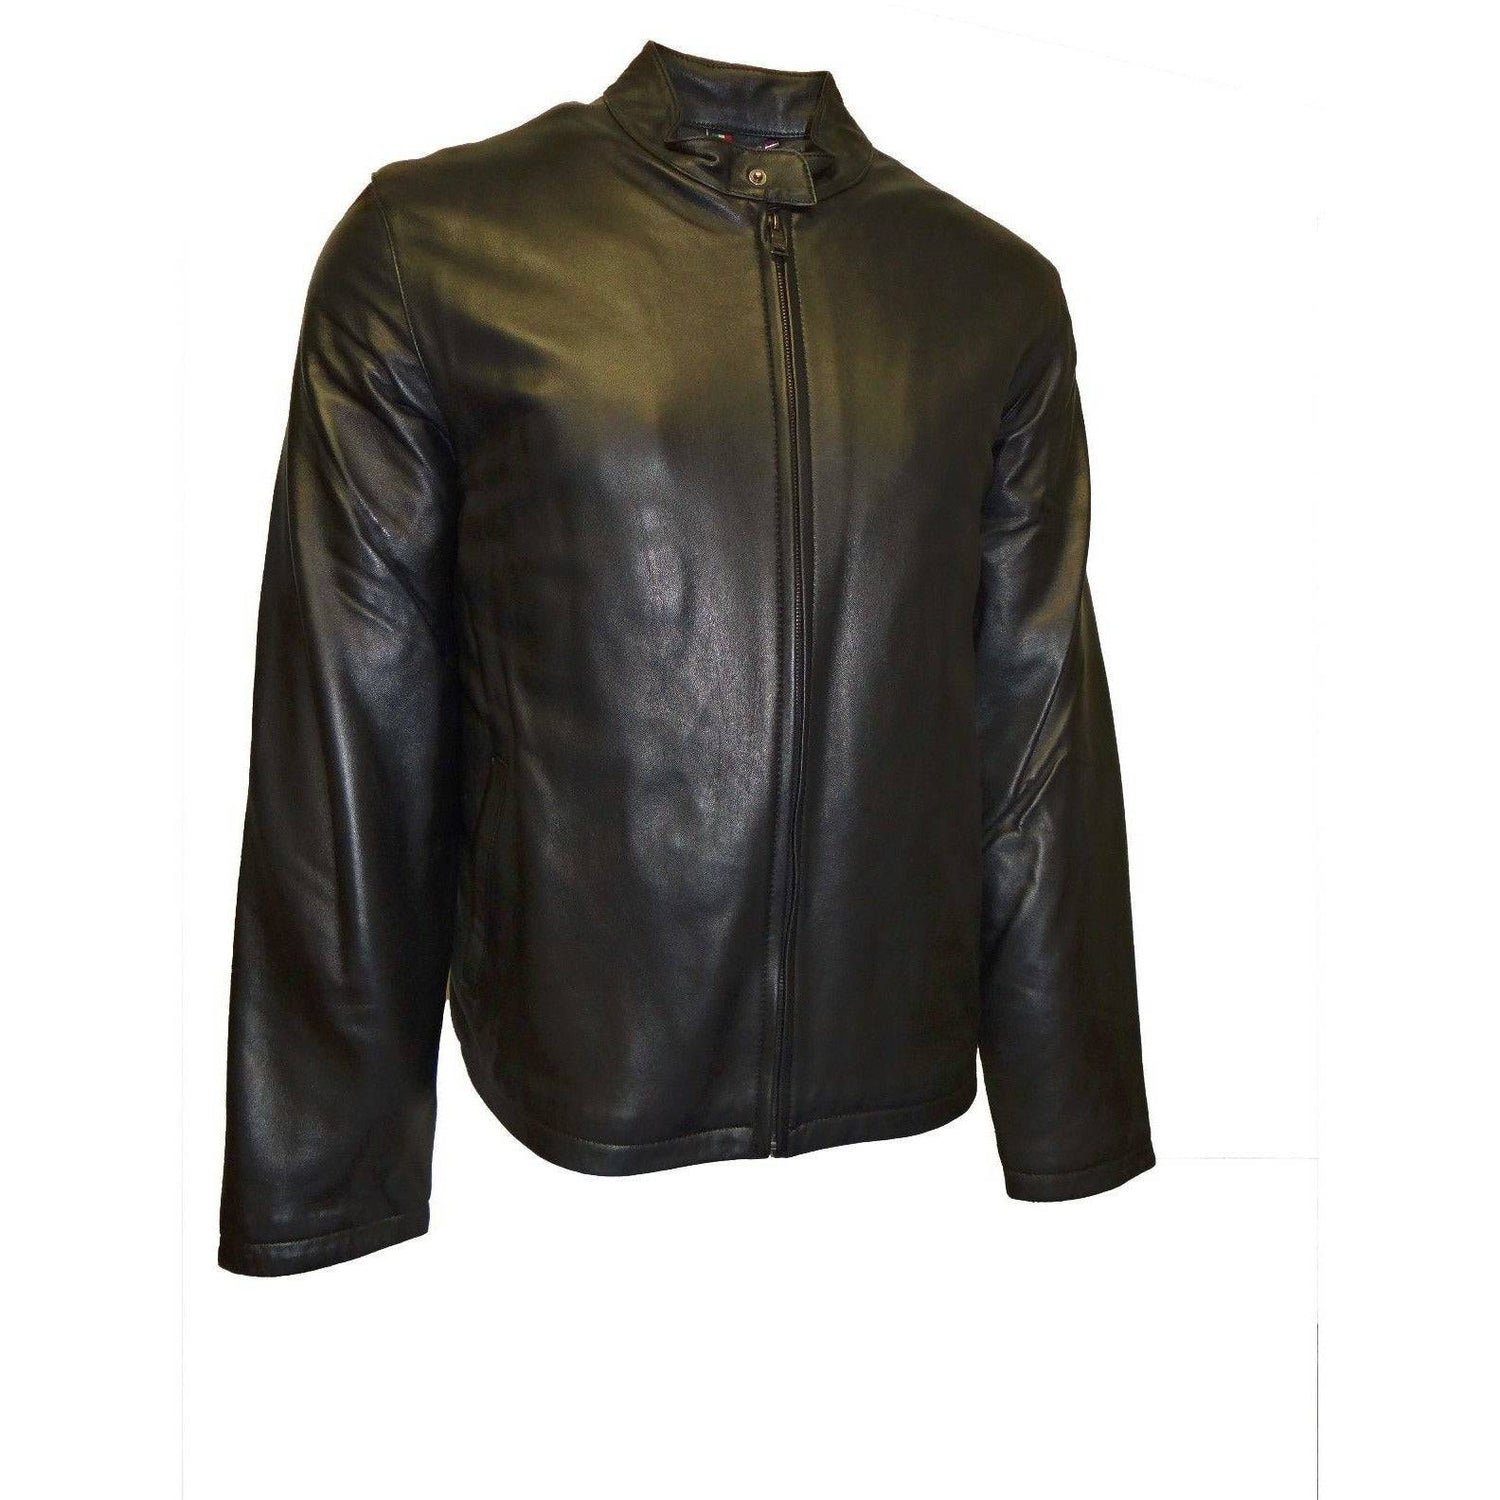 Knoles & Carter Men's Moto Leather Jacket - Zooloo Leather